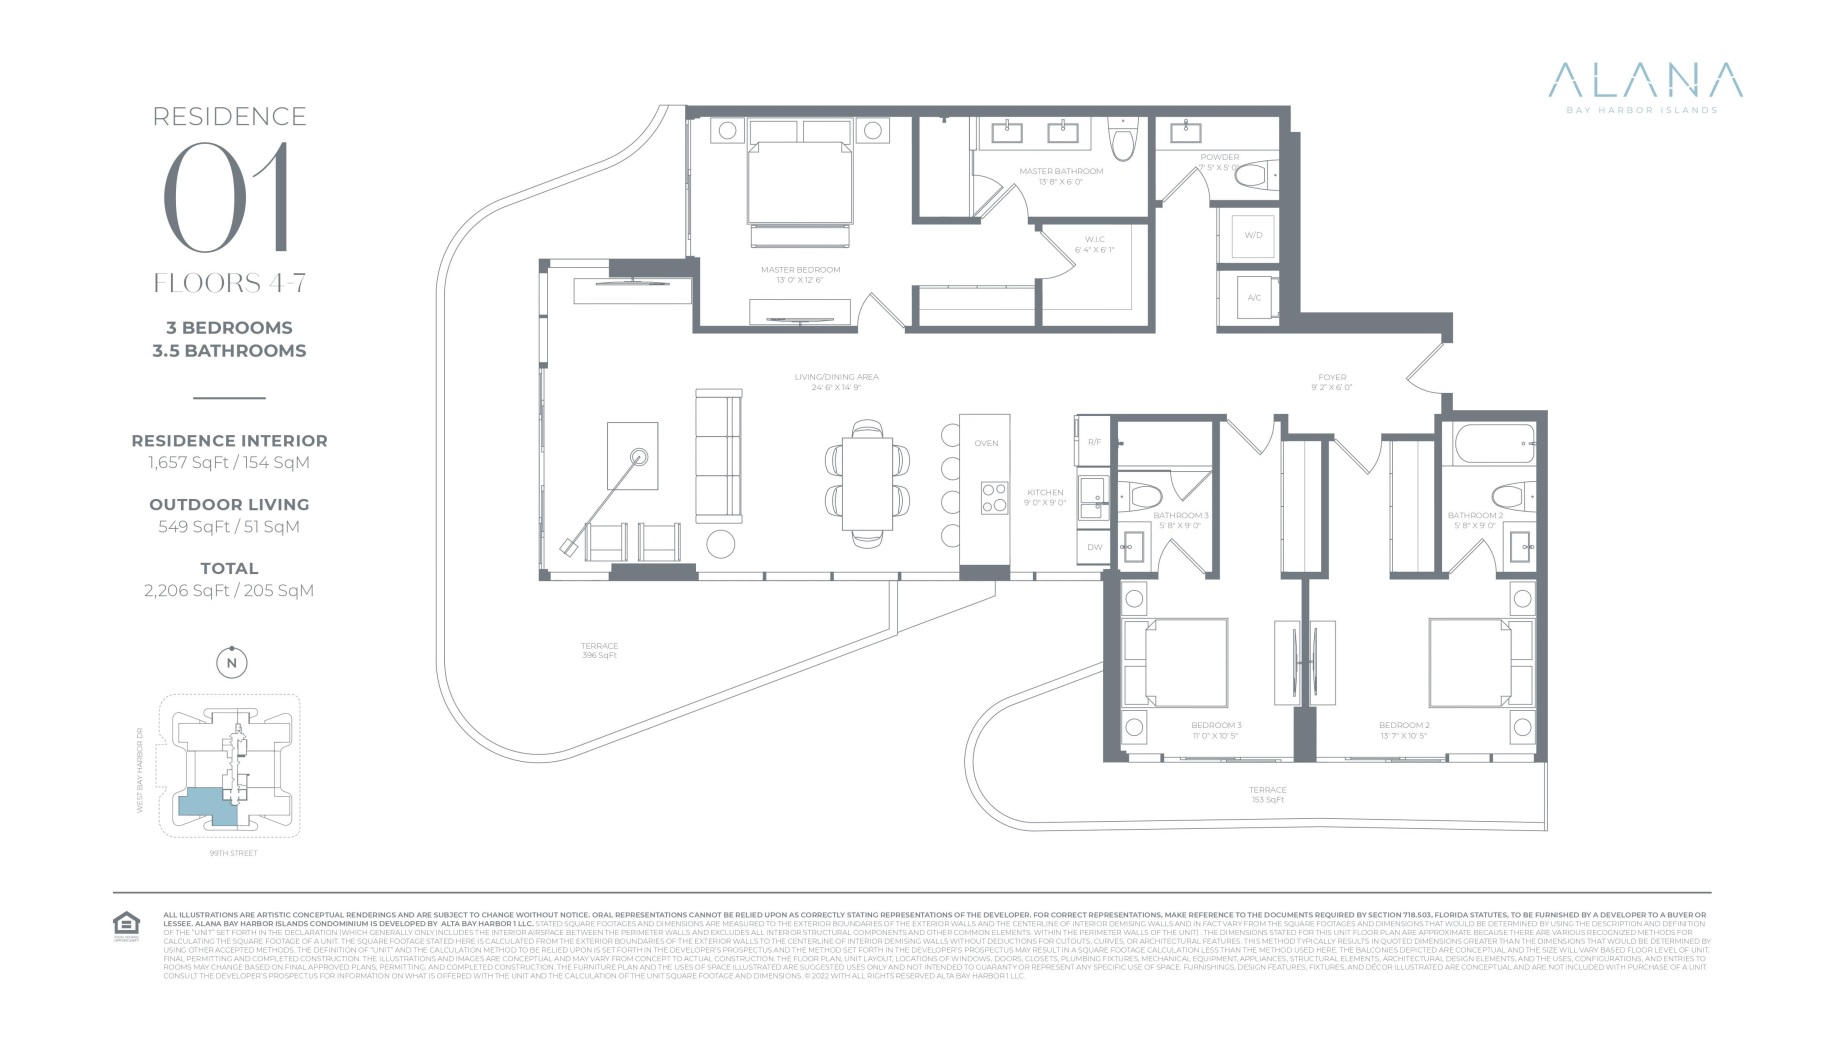 Alana_Floorplan_Residence01_floor4-7_3bed_3.5bath